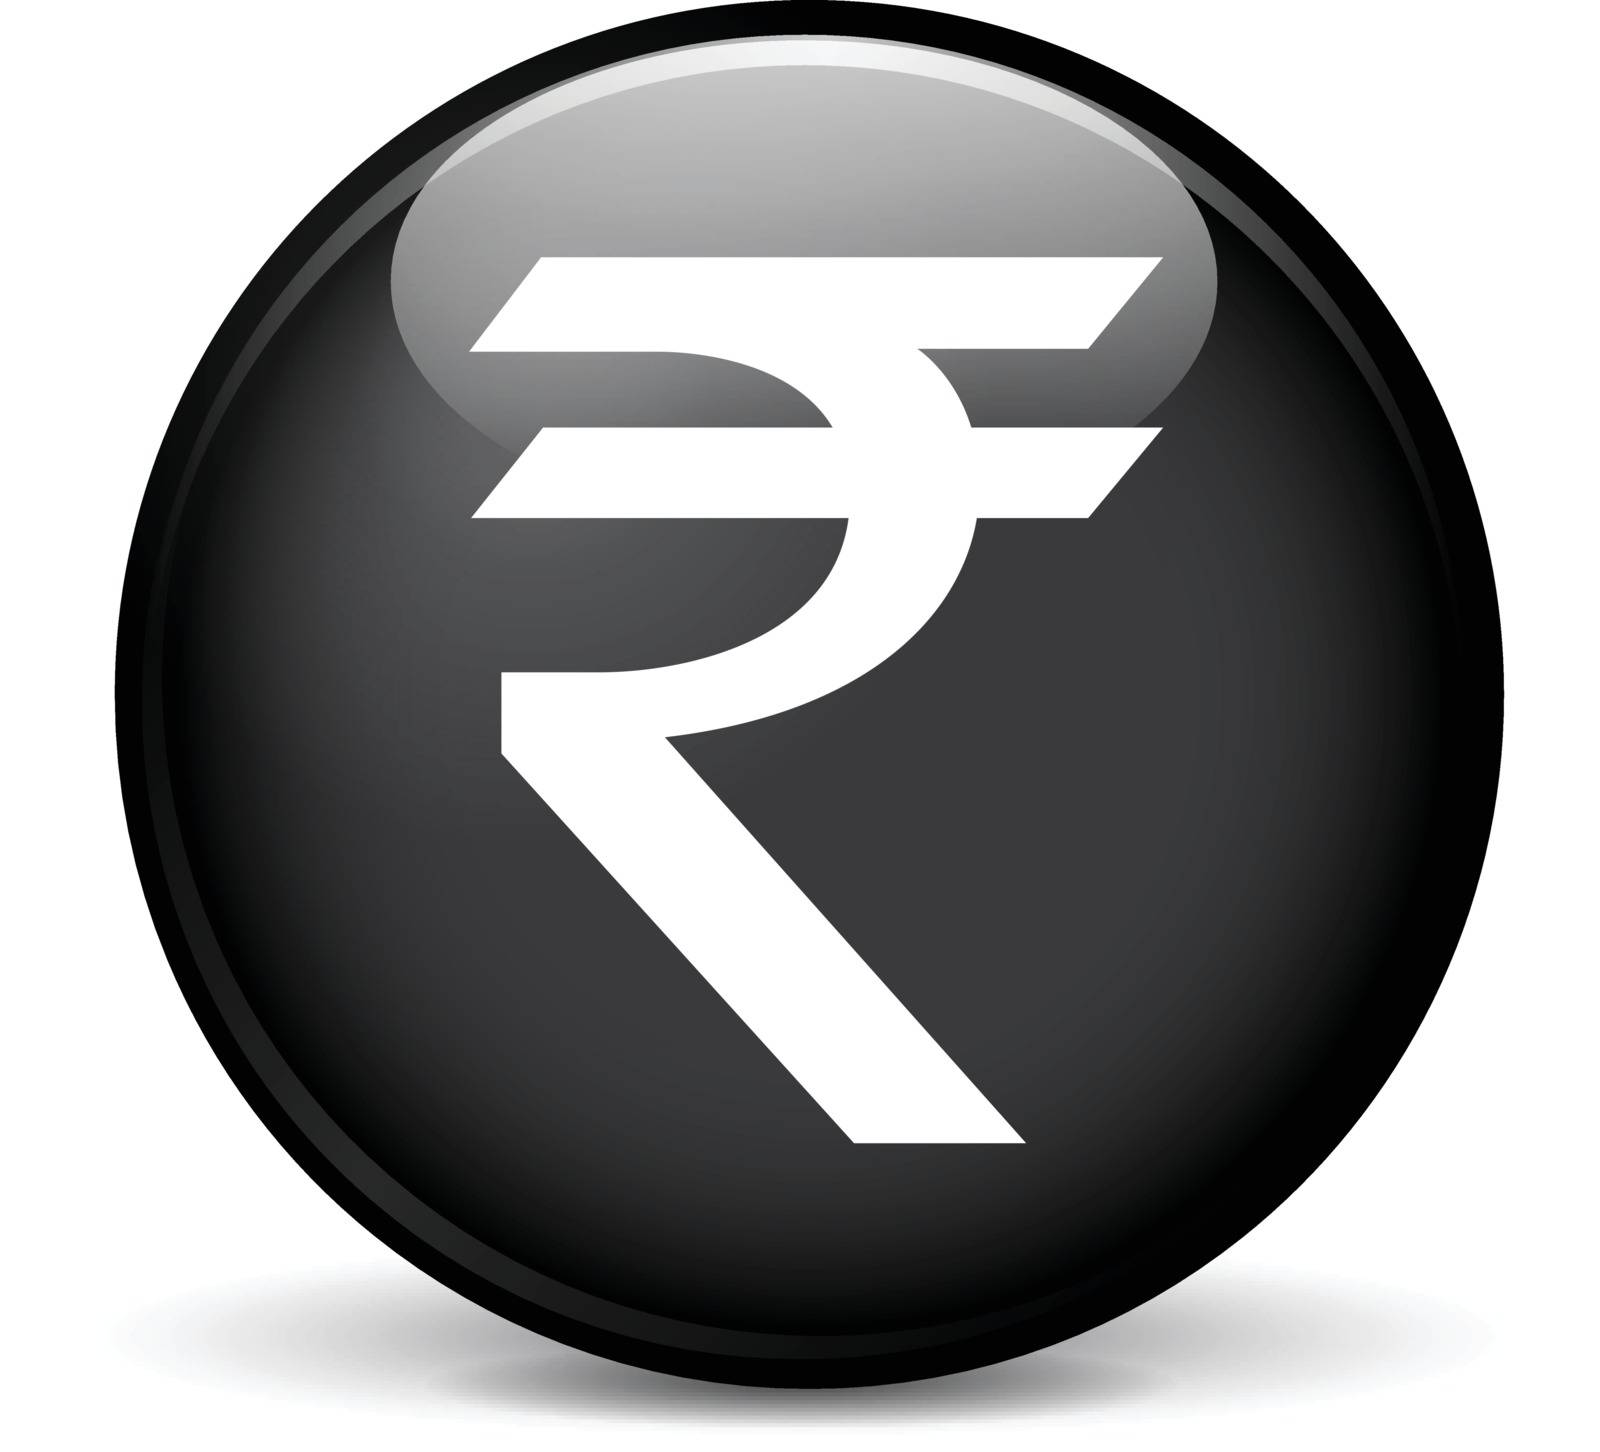 Illustration of rupee modern design black sphere icon